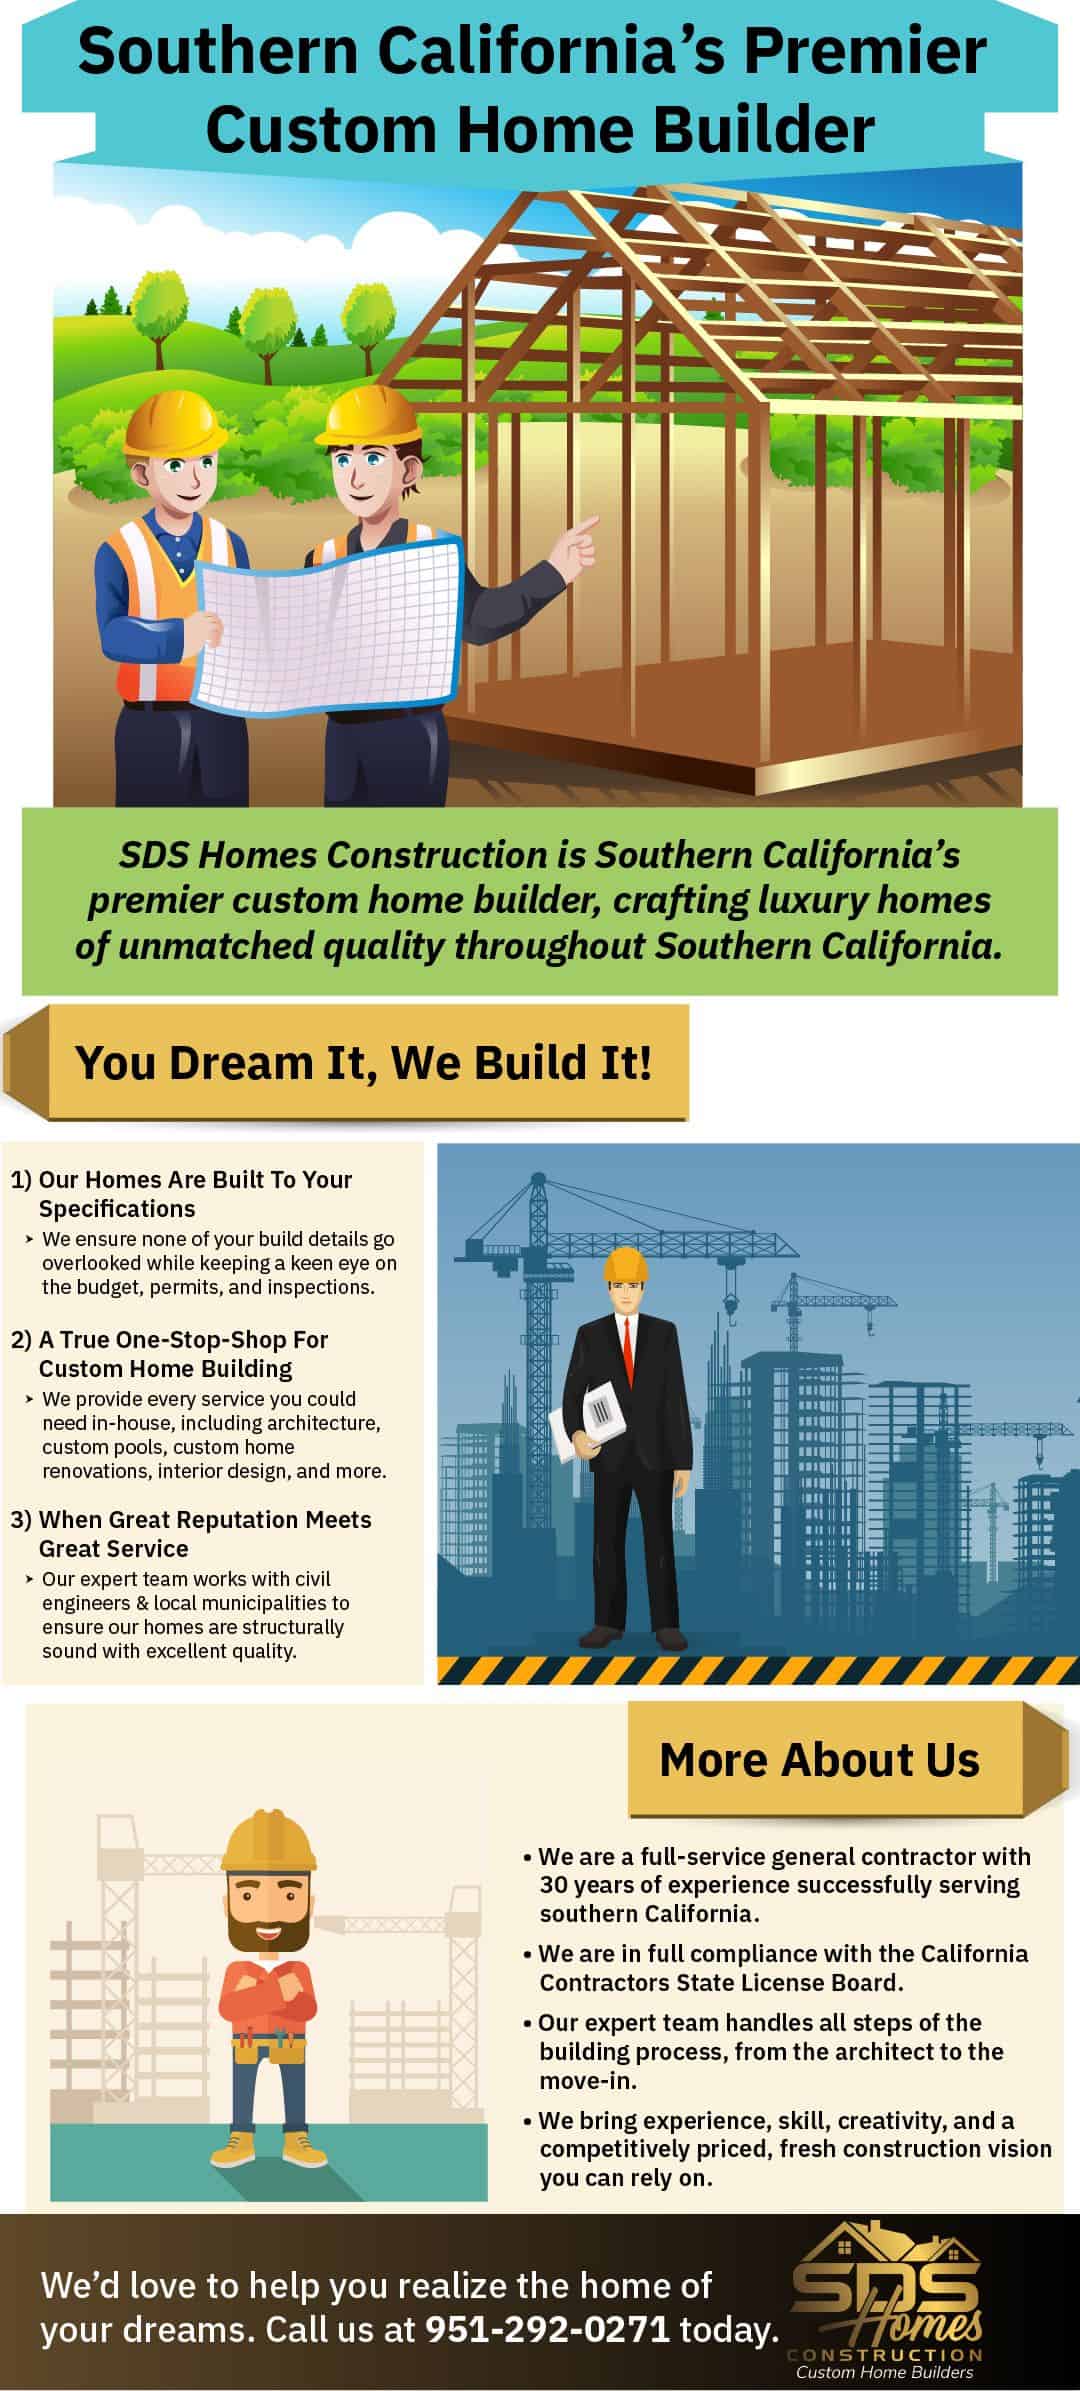 Southern California’s Premier Custom Home Builder!